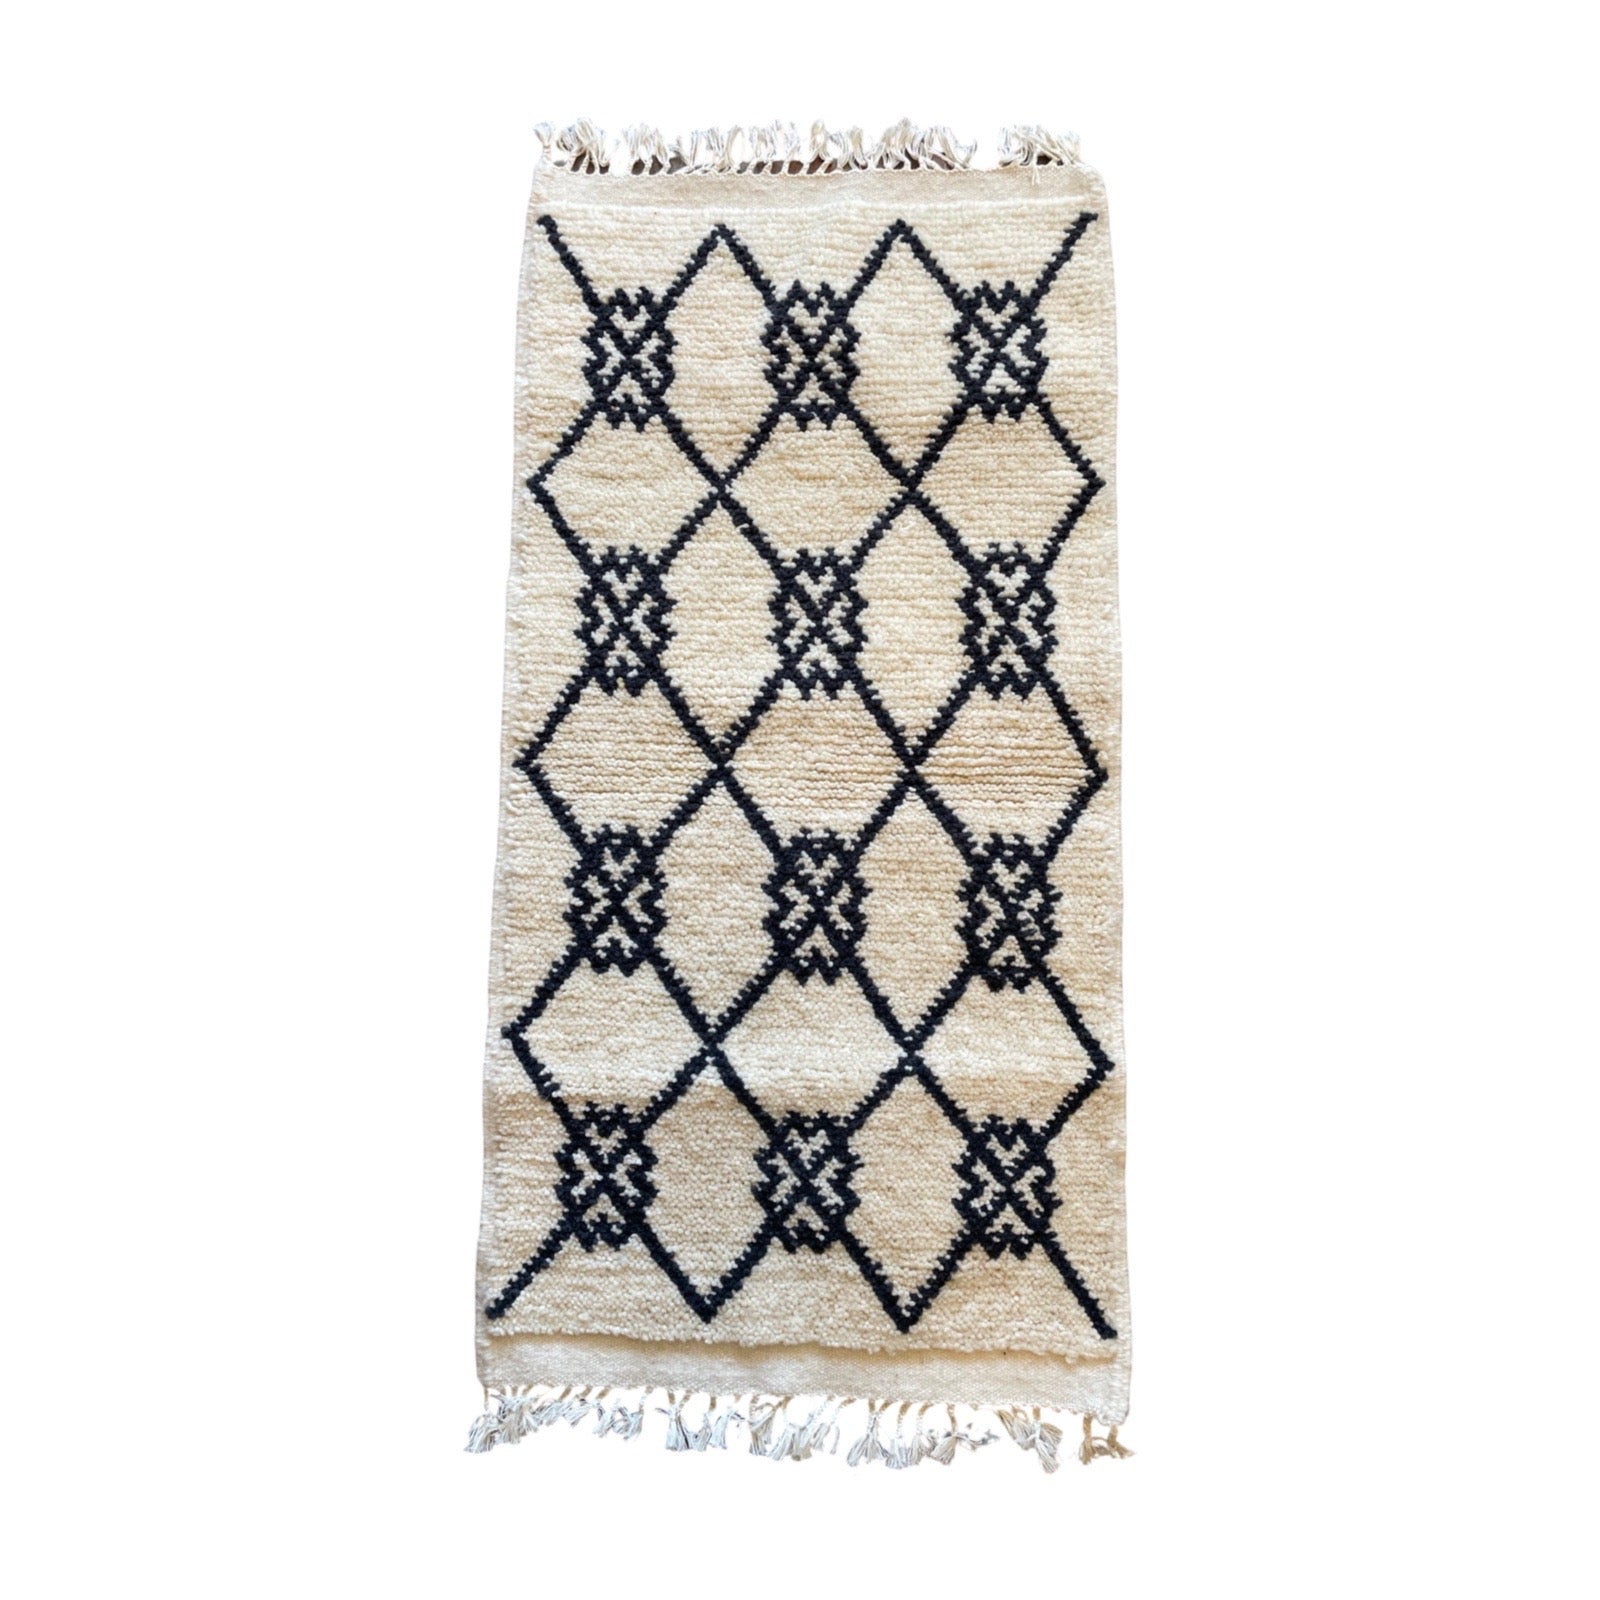 Contemporary white and black Moroccan throw rug - Kantara | Moroccan Rugs